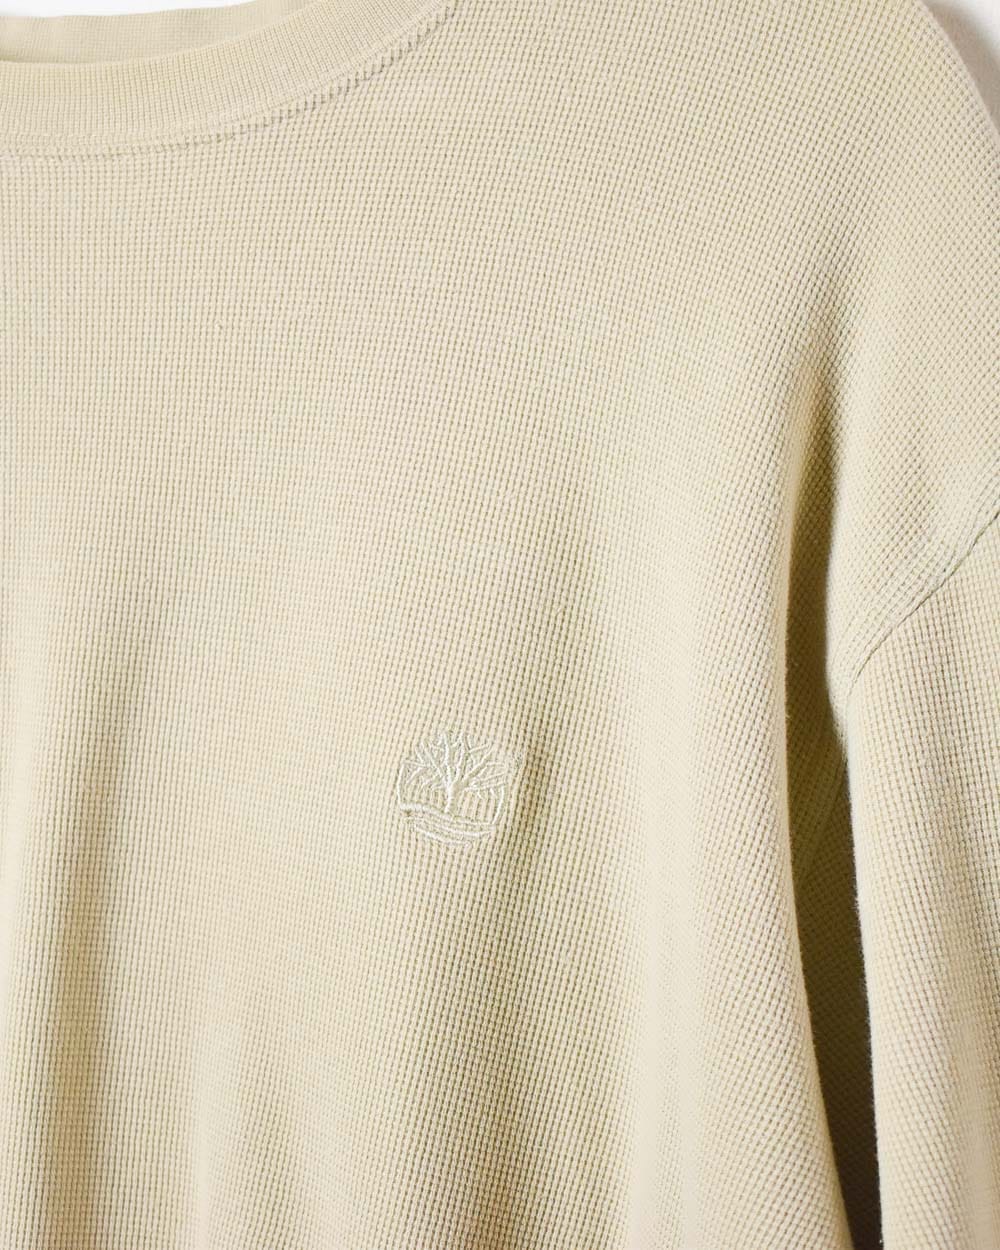 Neutral Timberland Sweatshirt - Large